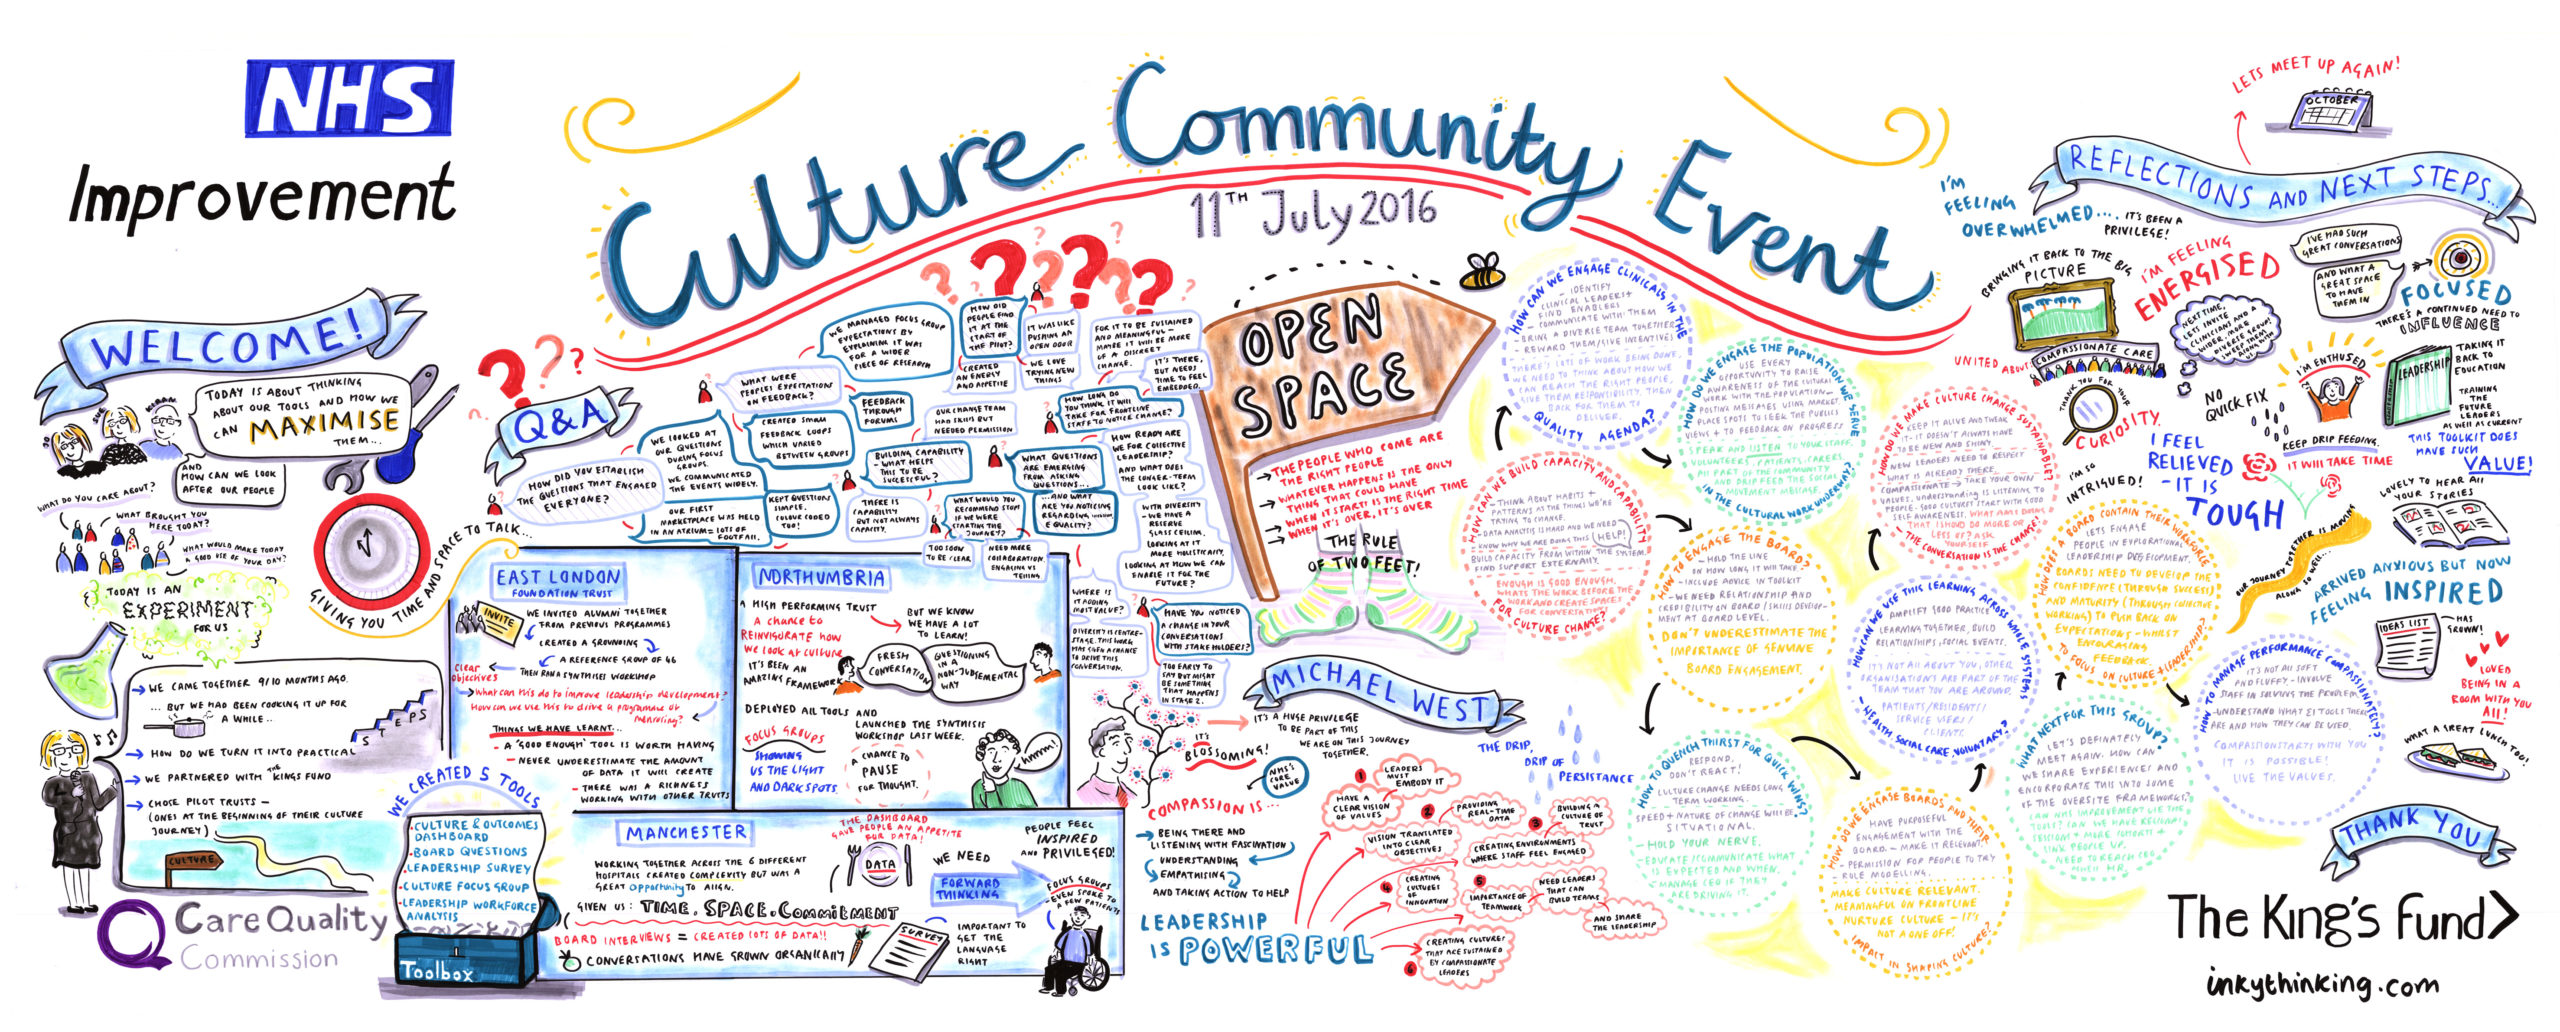 NHS Culture Community Event 2016